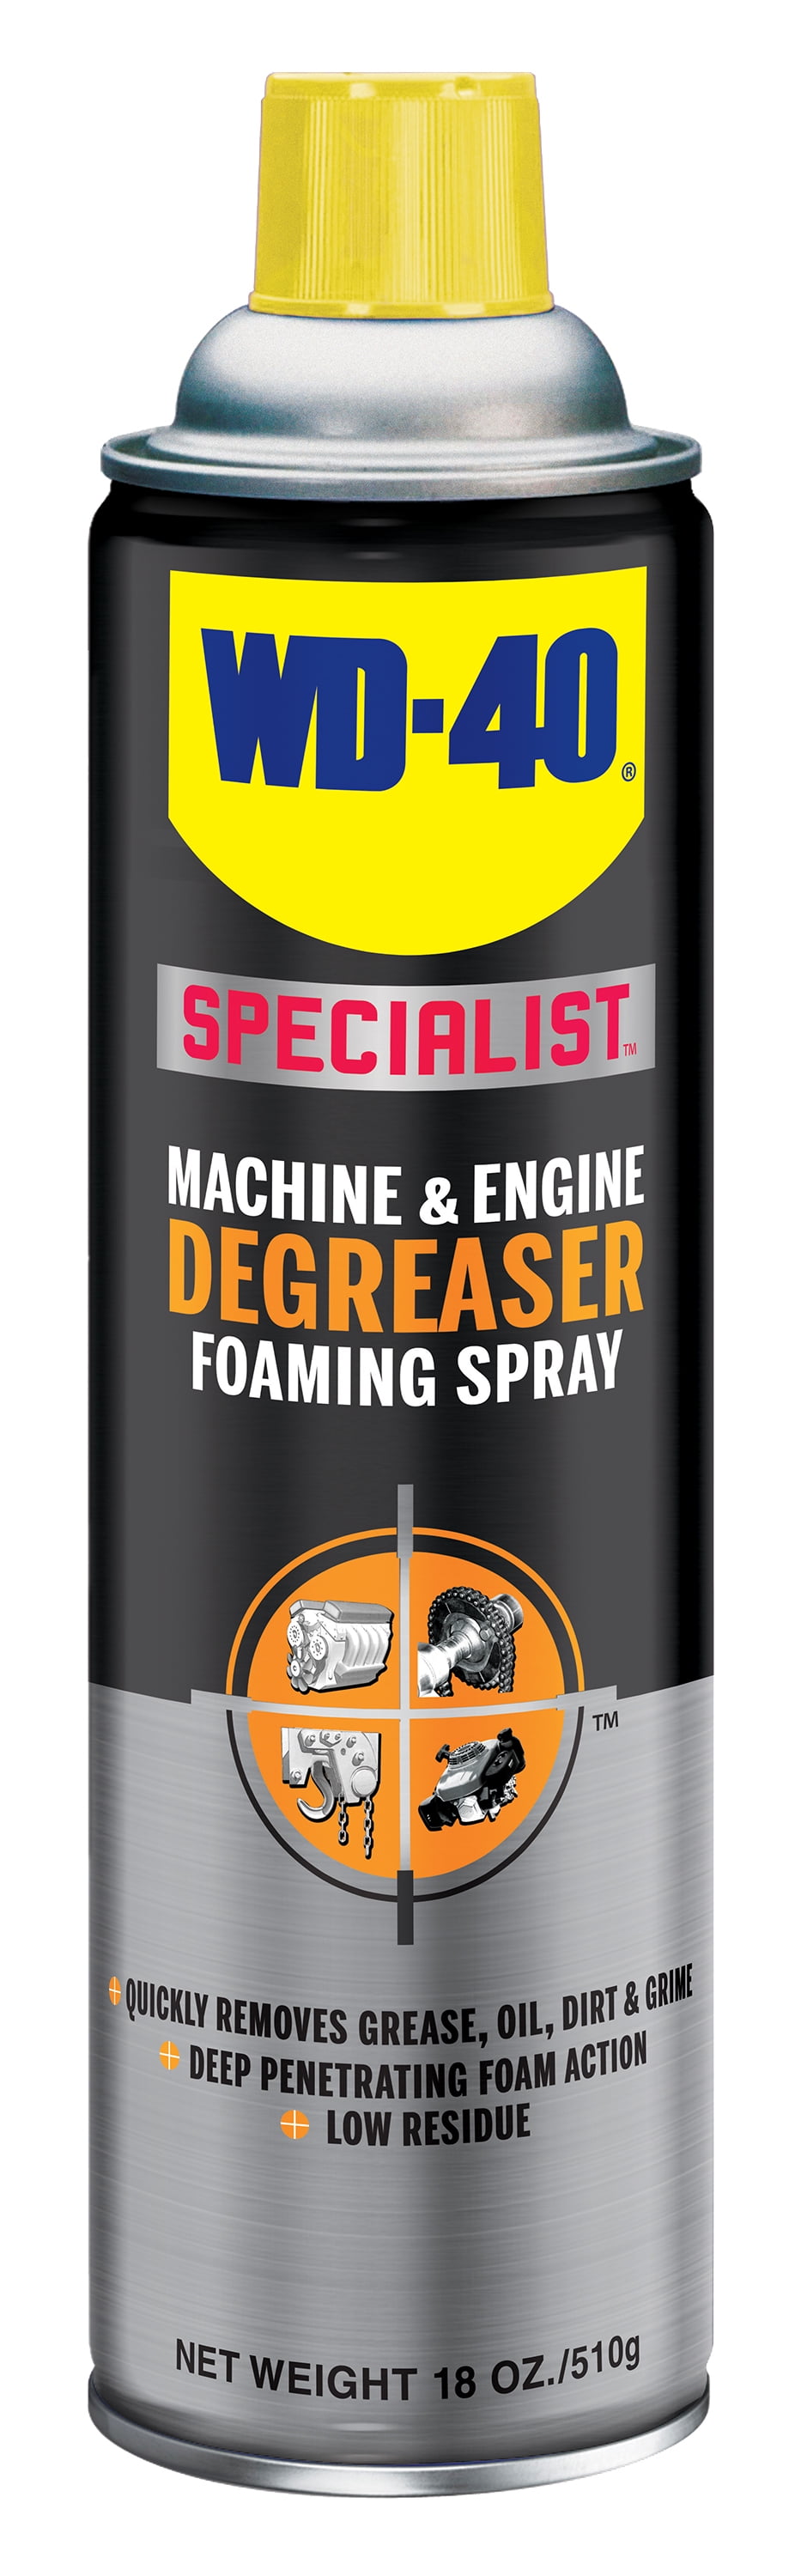 Foaming Engine Degreaser - DoctorWax